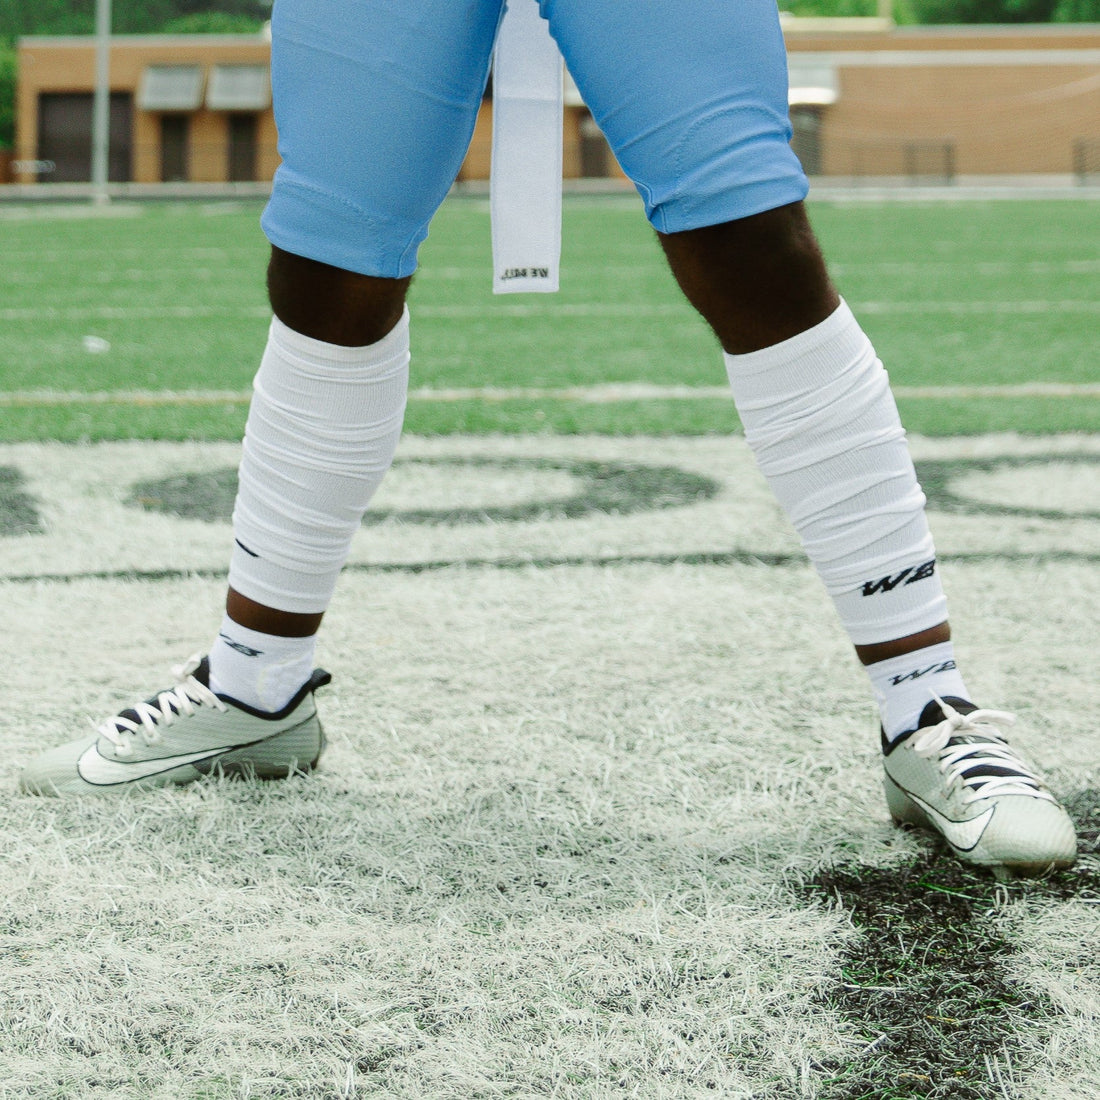 Calf Compression Leg Sleeves - Football Leg Sleeves for Adult Athletes -  Shin Splint Support-White 